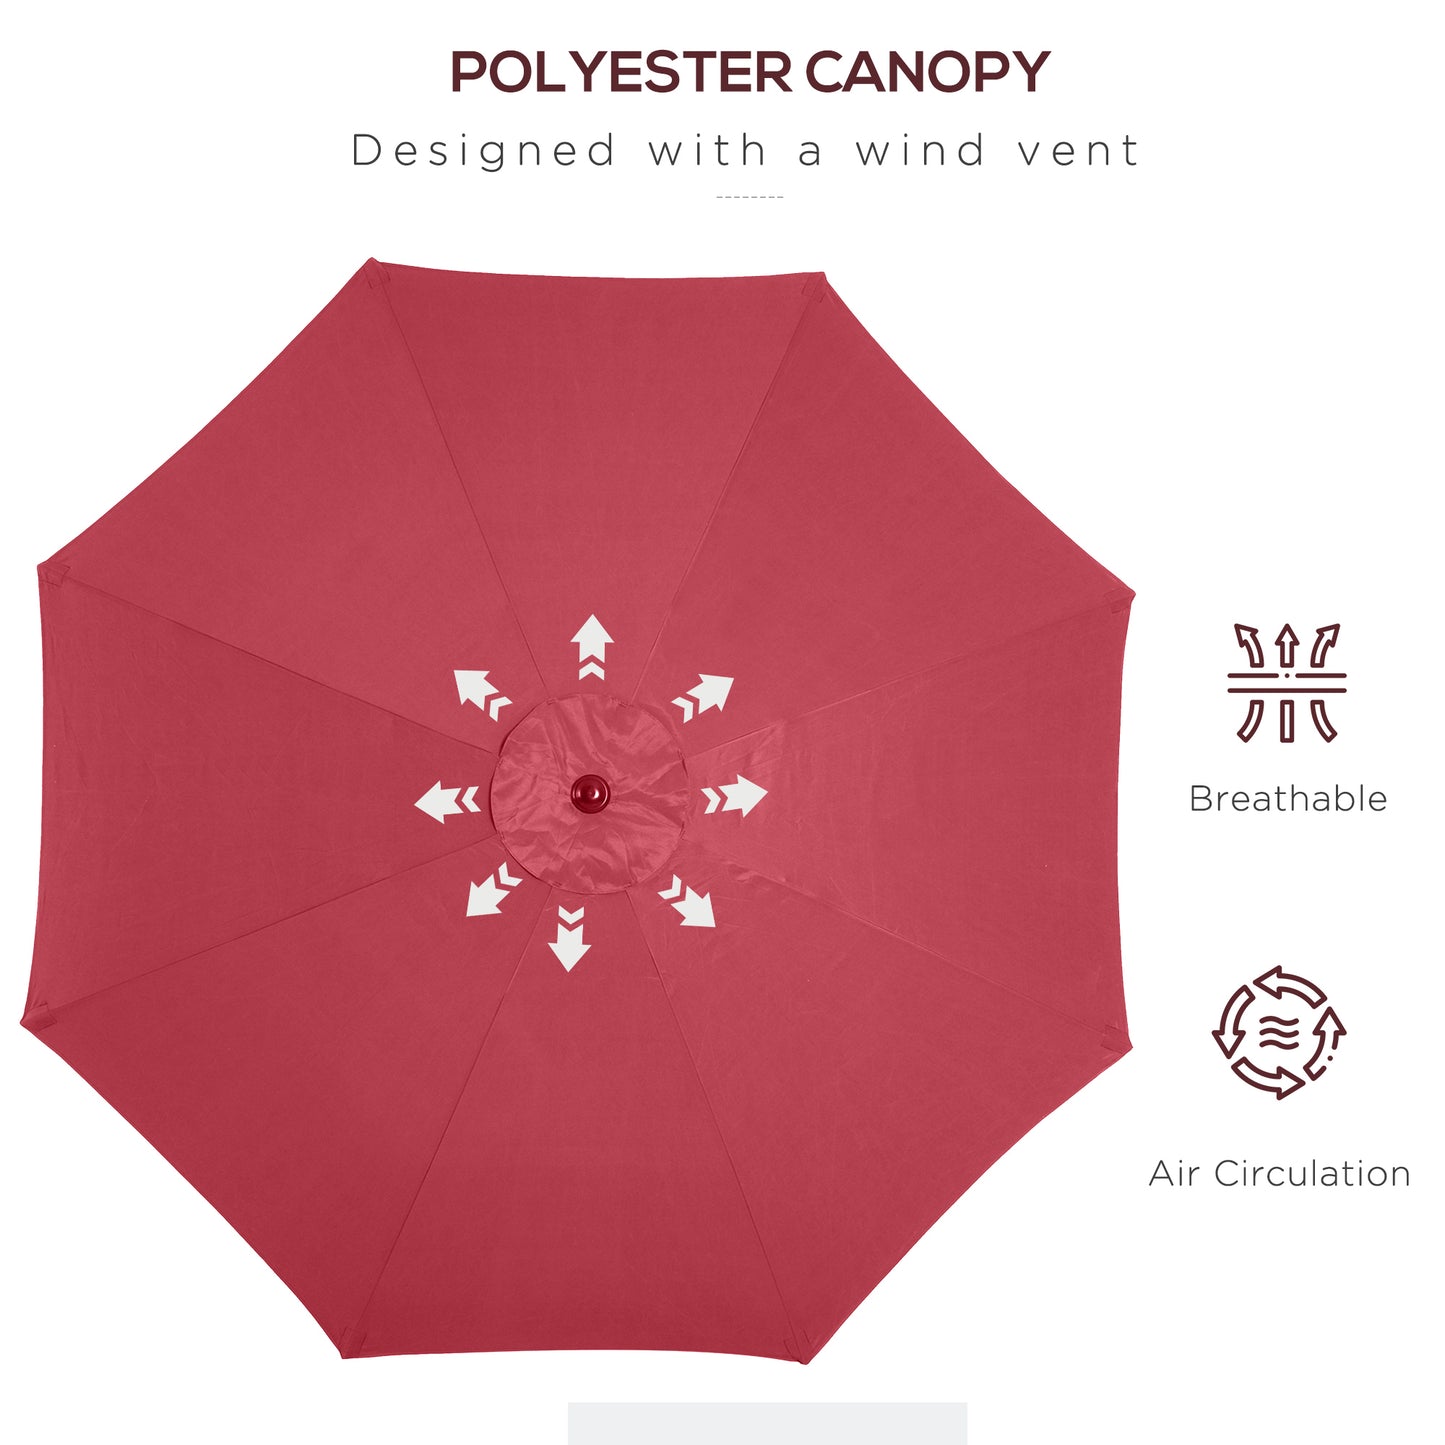 Outsunny 3m Parasol Patio Umbrella, Outdoor Sun Shade with Tilt and Crank Handle for Balcony, Bench, Garden, Wine Red Sunshade Canopy